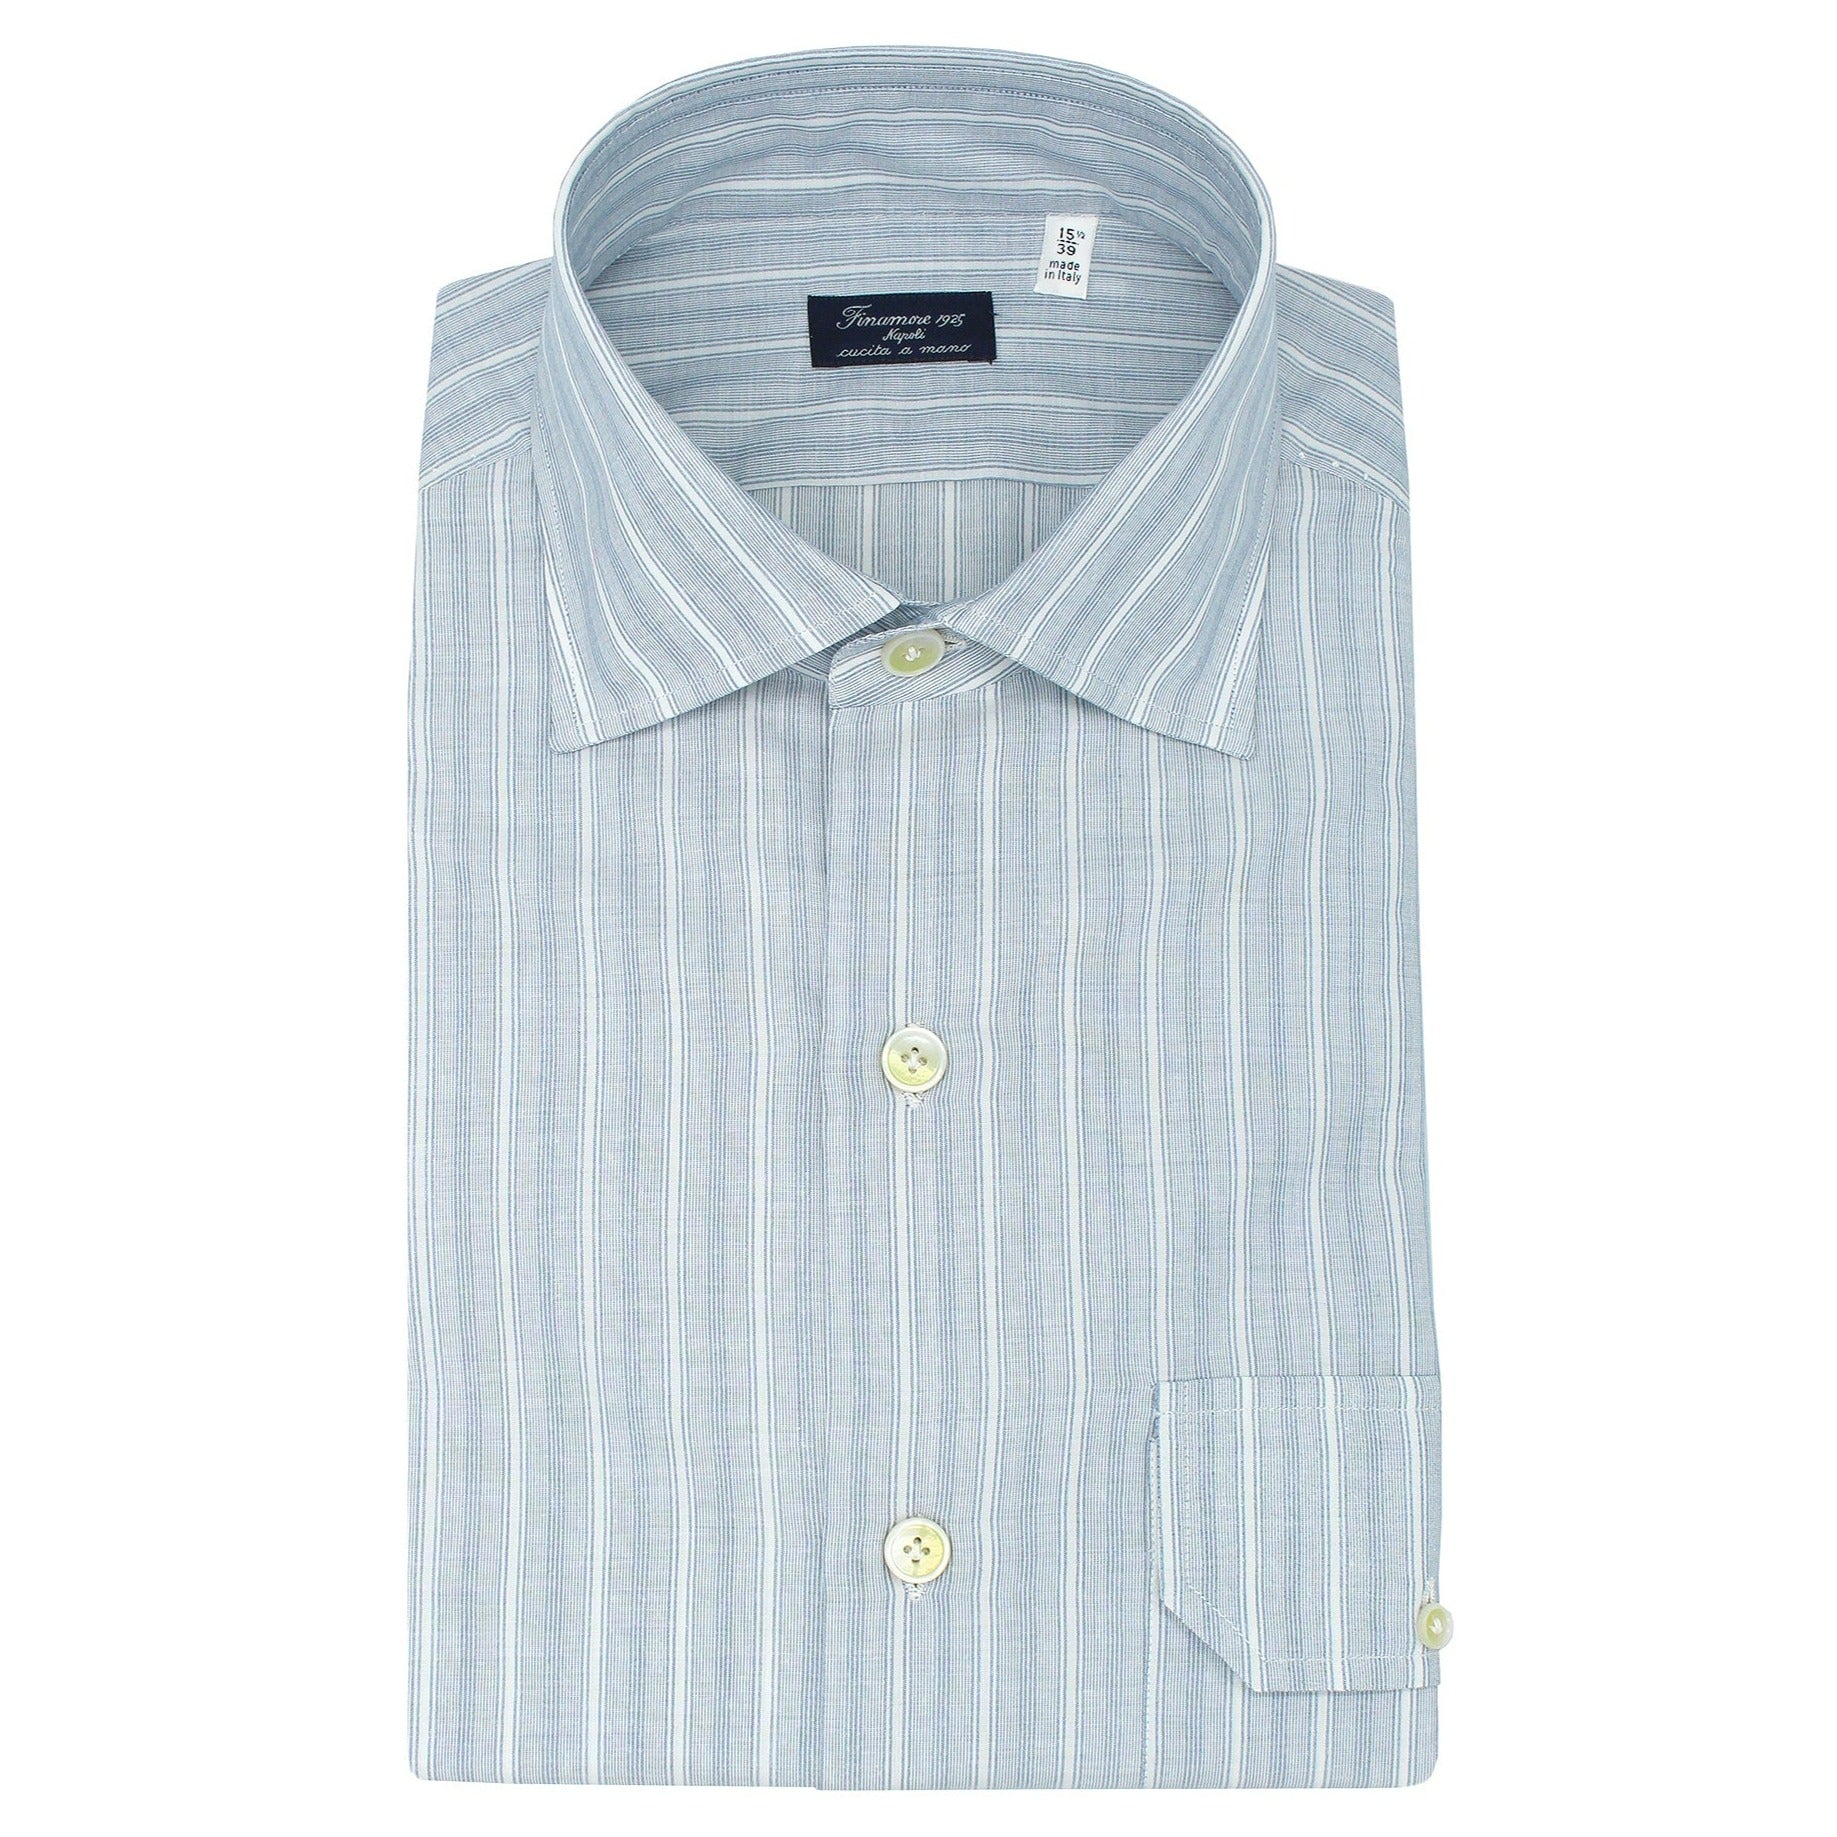 Regular Napoli cotton shirt Carlo Riva micro light blue stripes